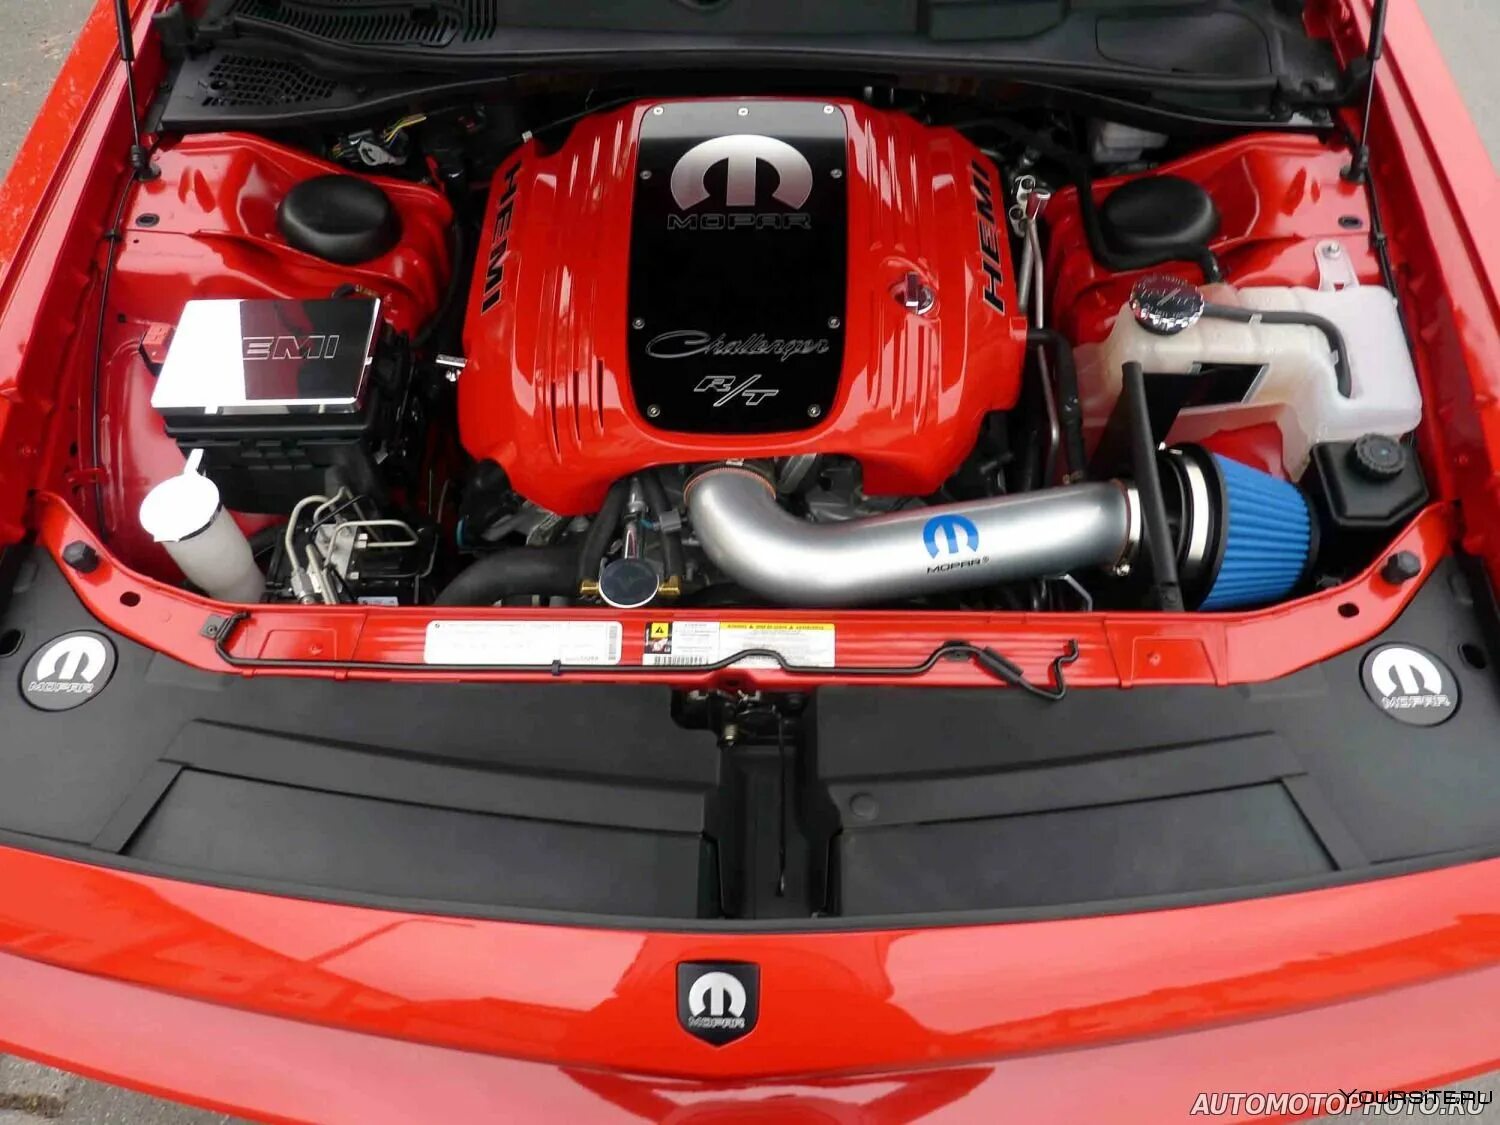 Додж челленджер двигатель. Мотор Додж Челленджер. Dodge Challenger srt8 двигатель. Распорка Challenger dodge 5.7. Dodge Challenger 2020 мотор.